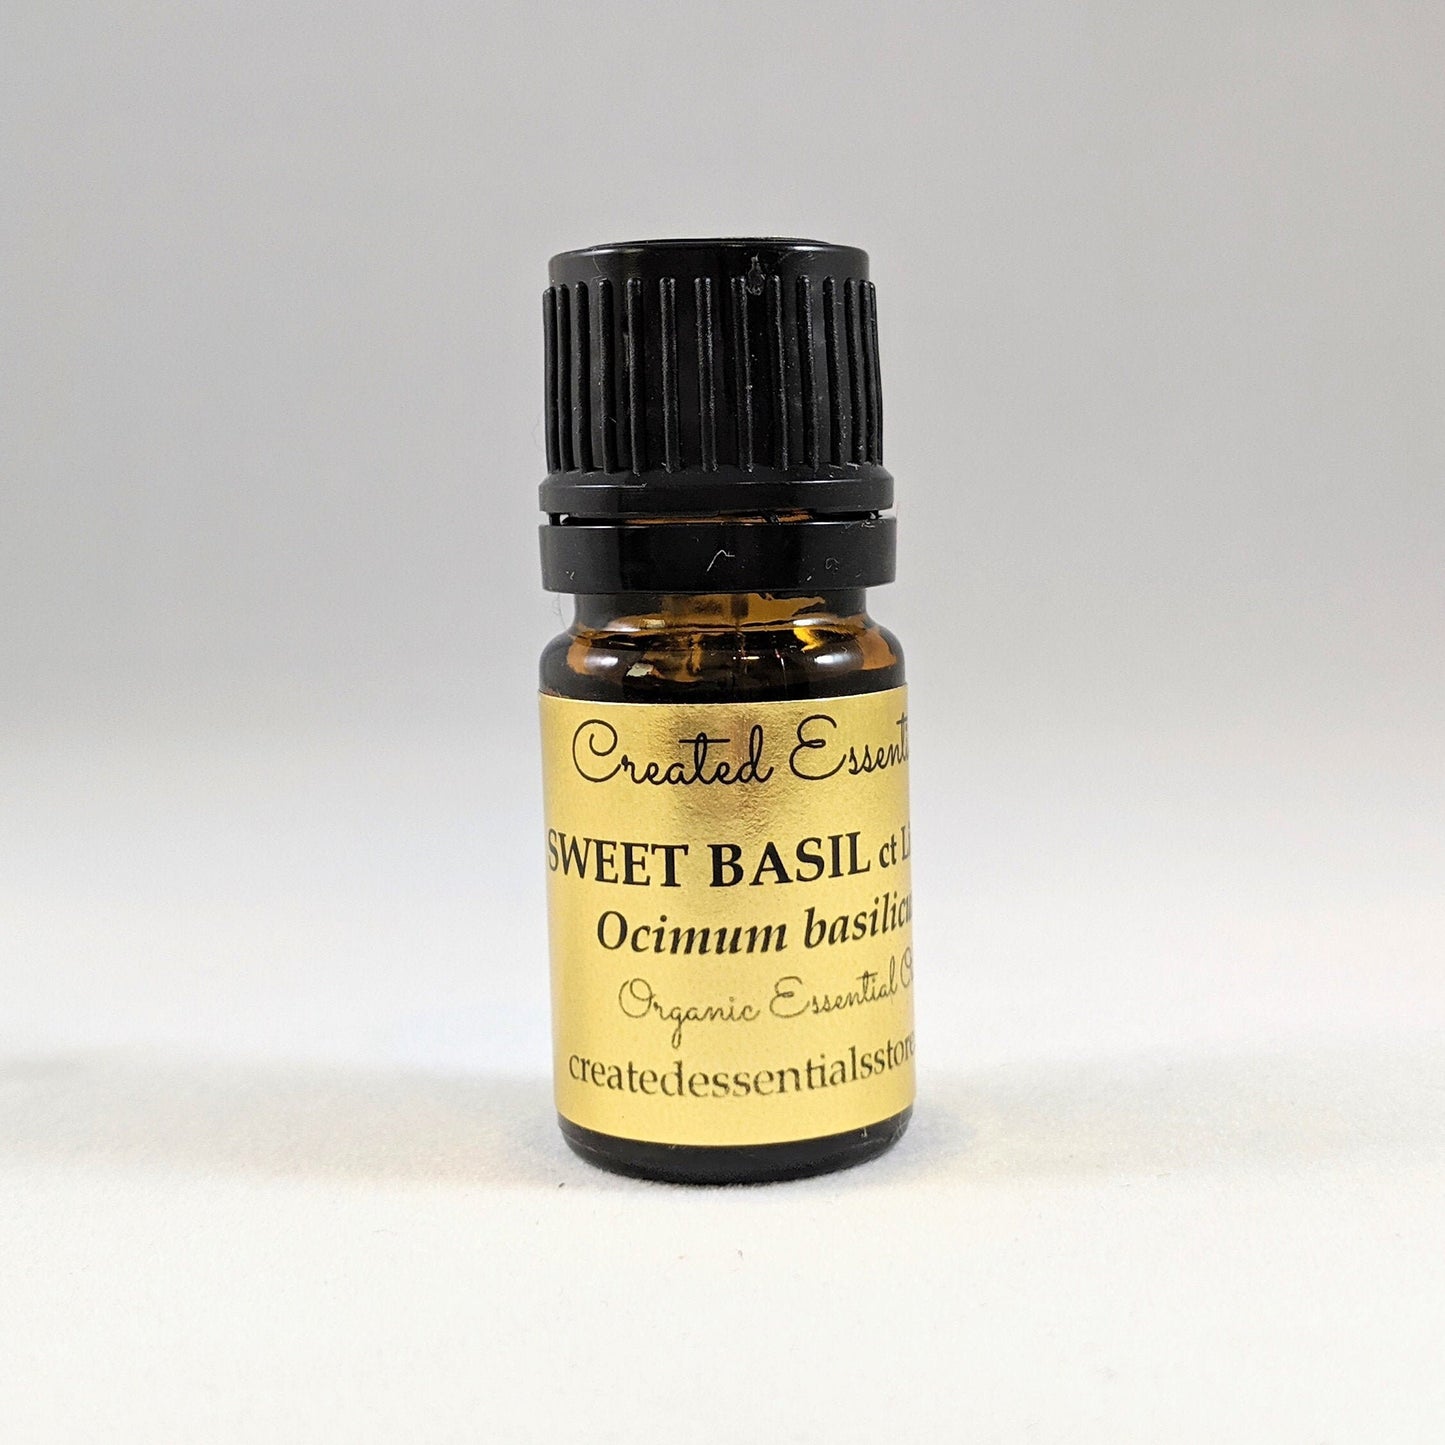 Basil Essential Oil, Organic Essential Oil of Basil Sweet ct Linalool, Pure Essential Oil, Basil Aromatherapy Oil